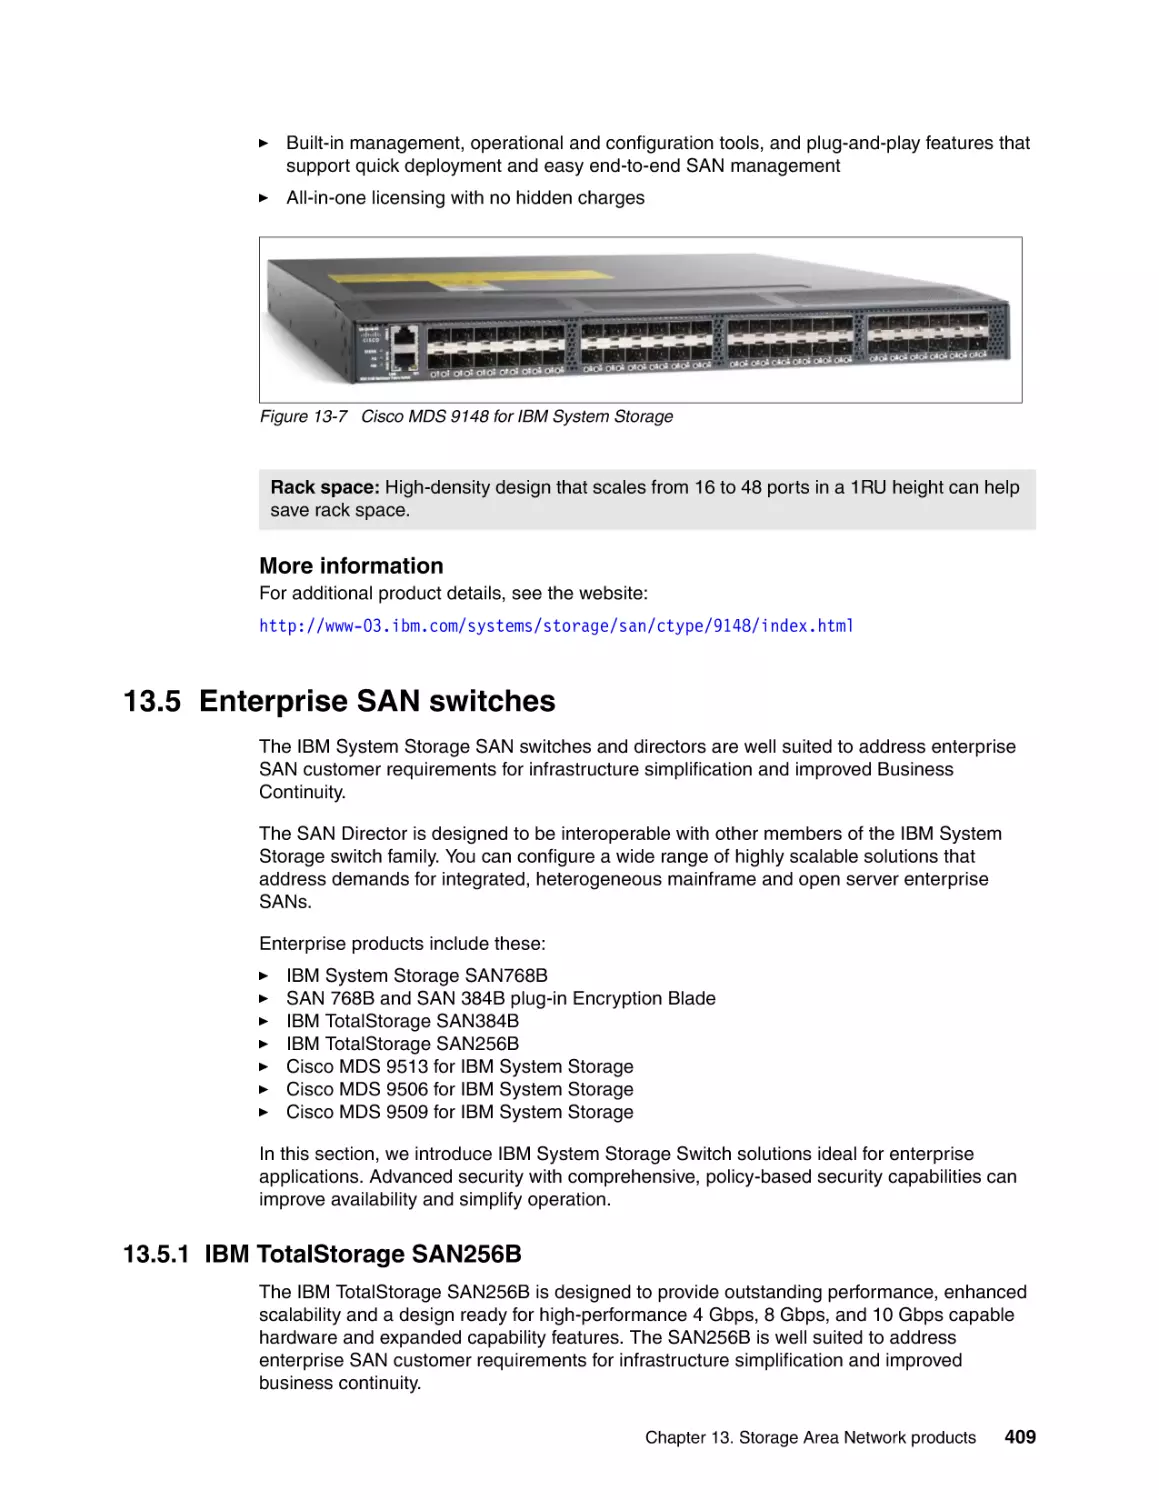 13.5 Enterprise SAN switches
13.5.1 IBM TotalStorage SAN256B